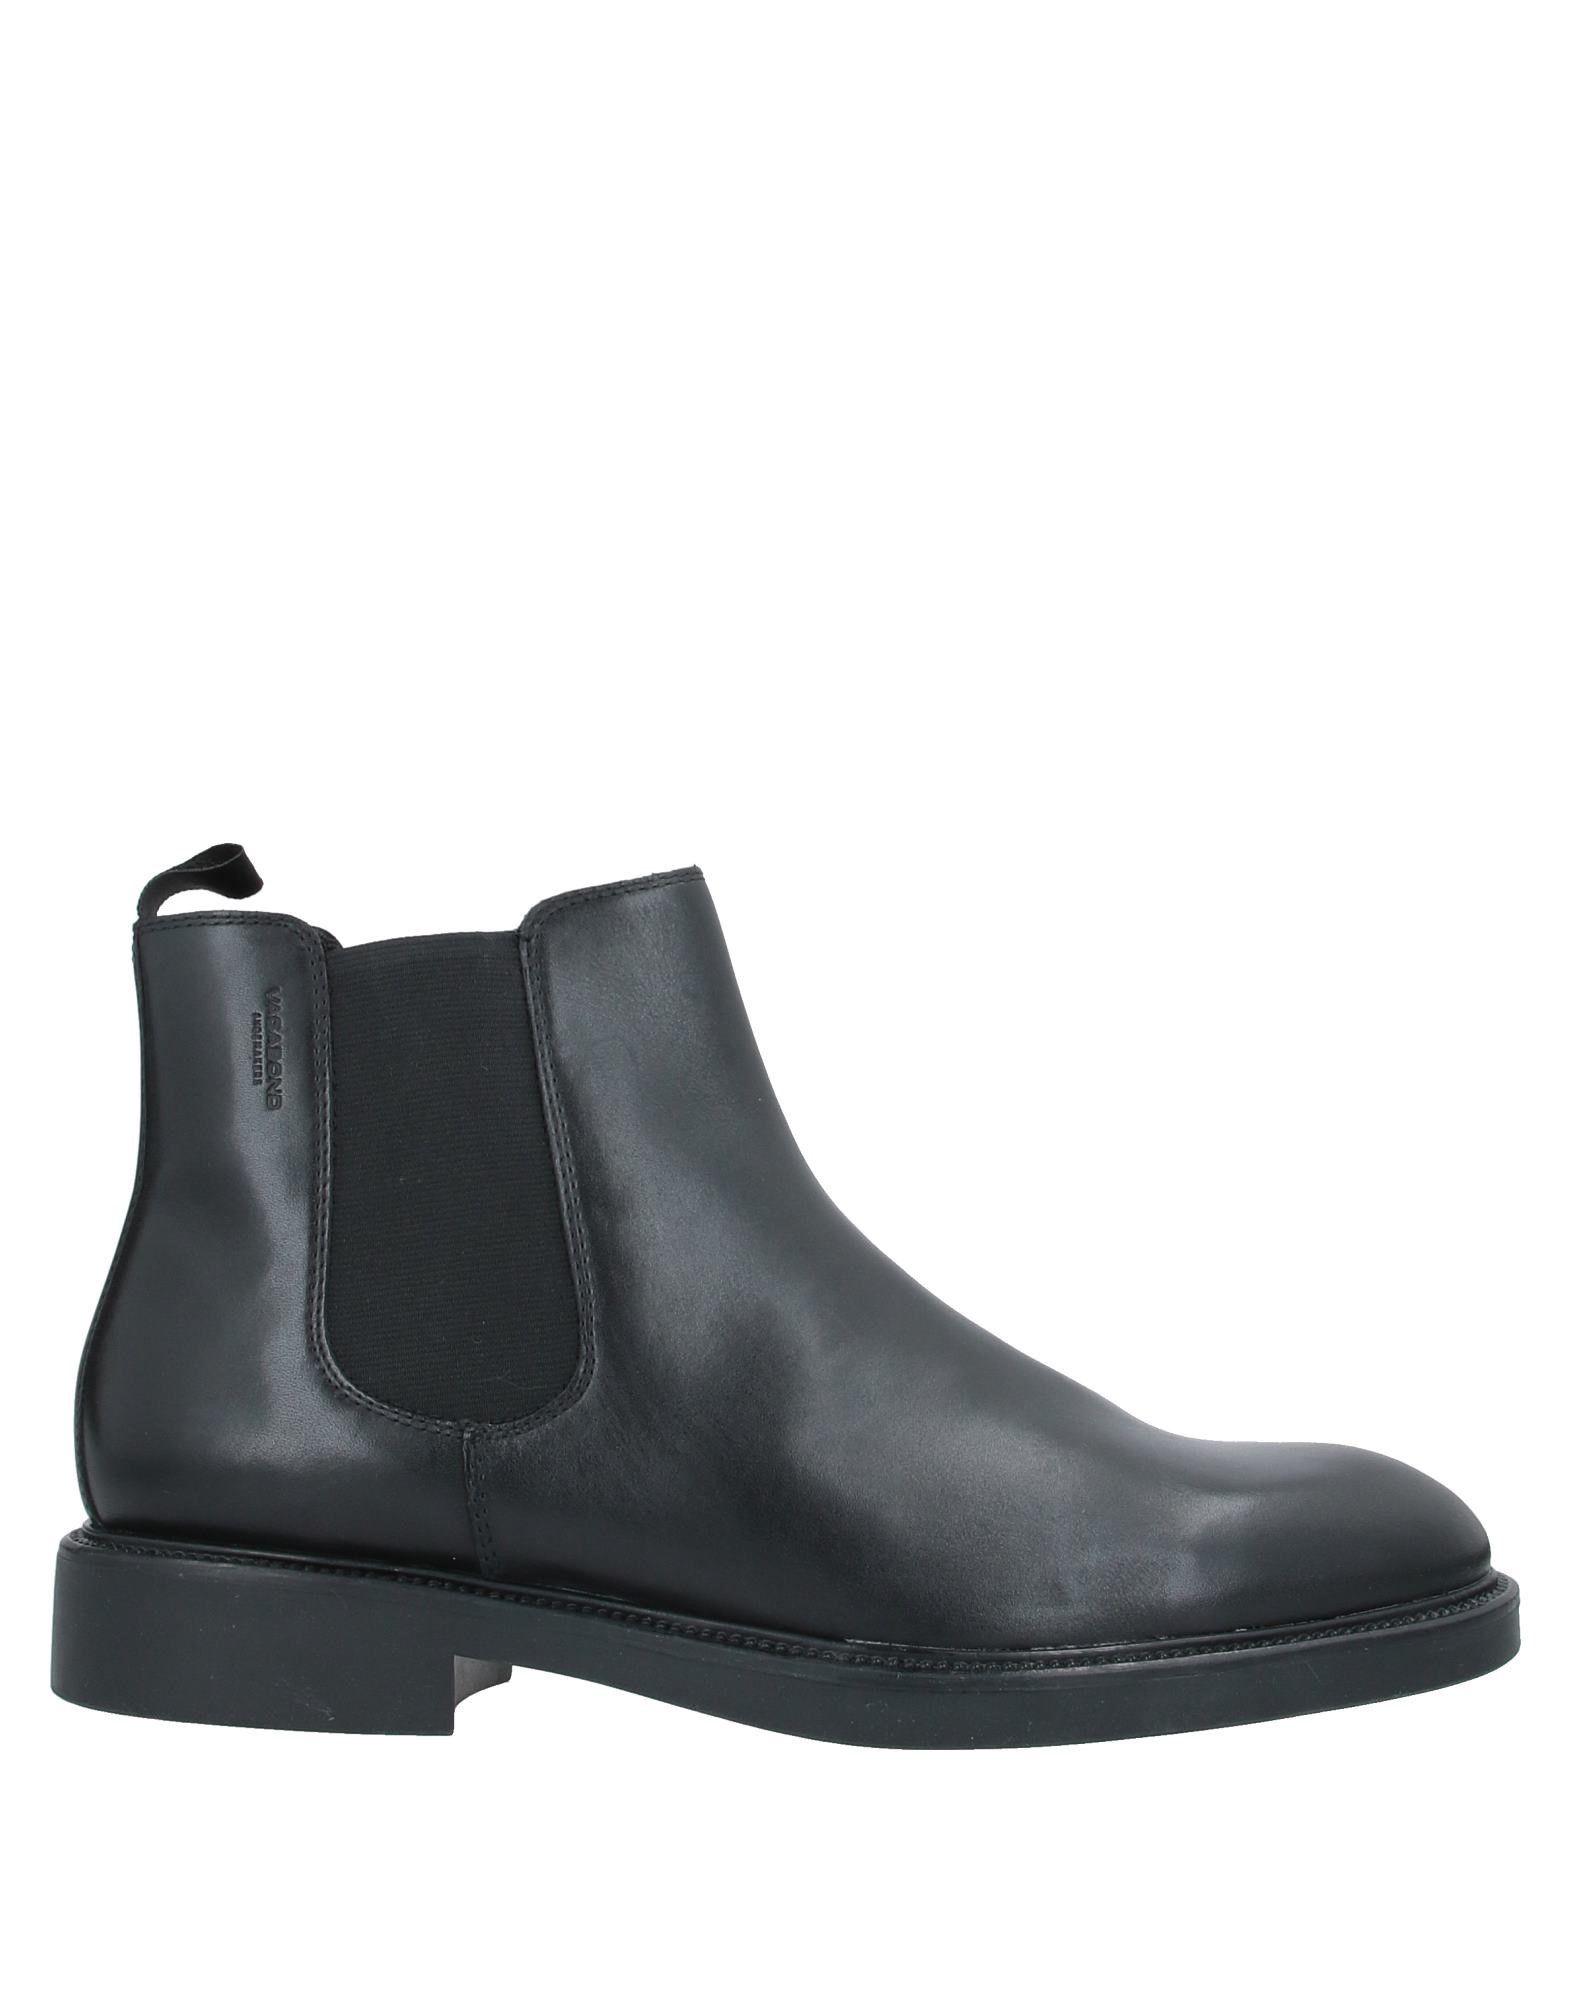 Vagabond Ankle Boots in Black for Men - Lyst